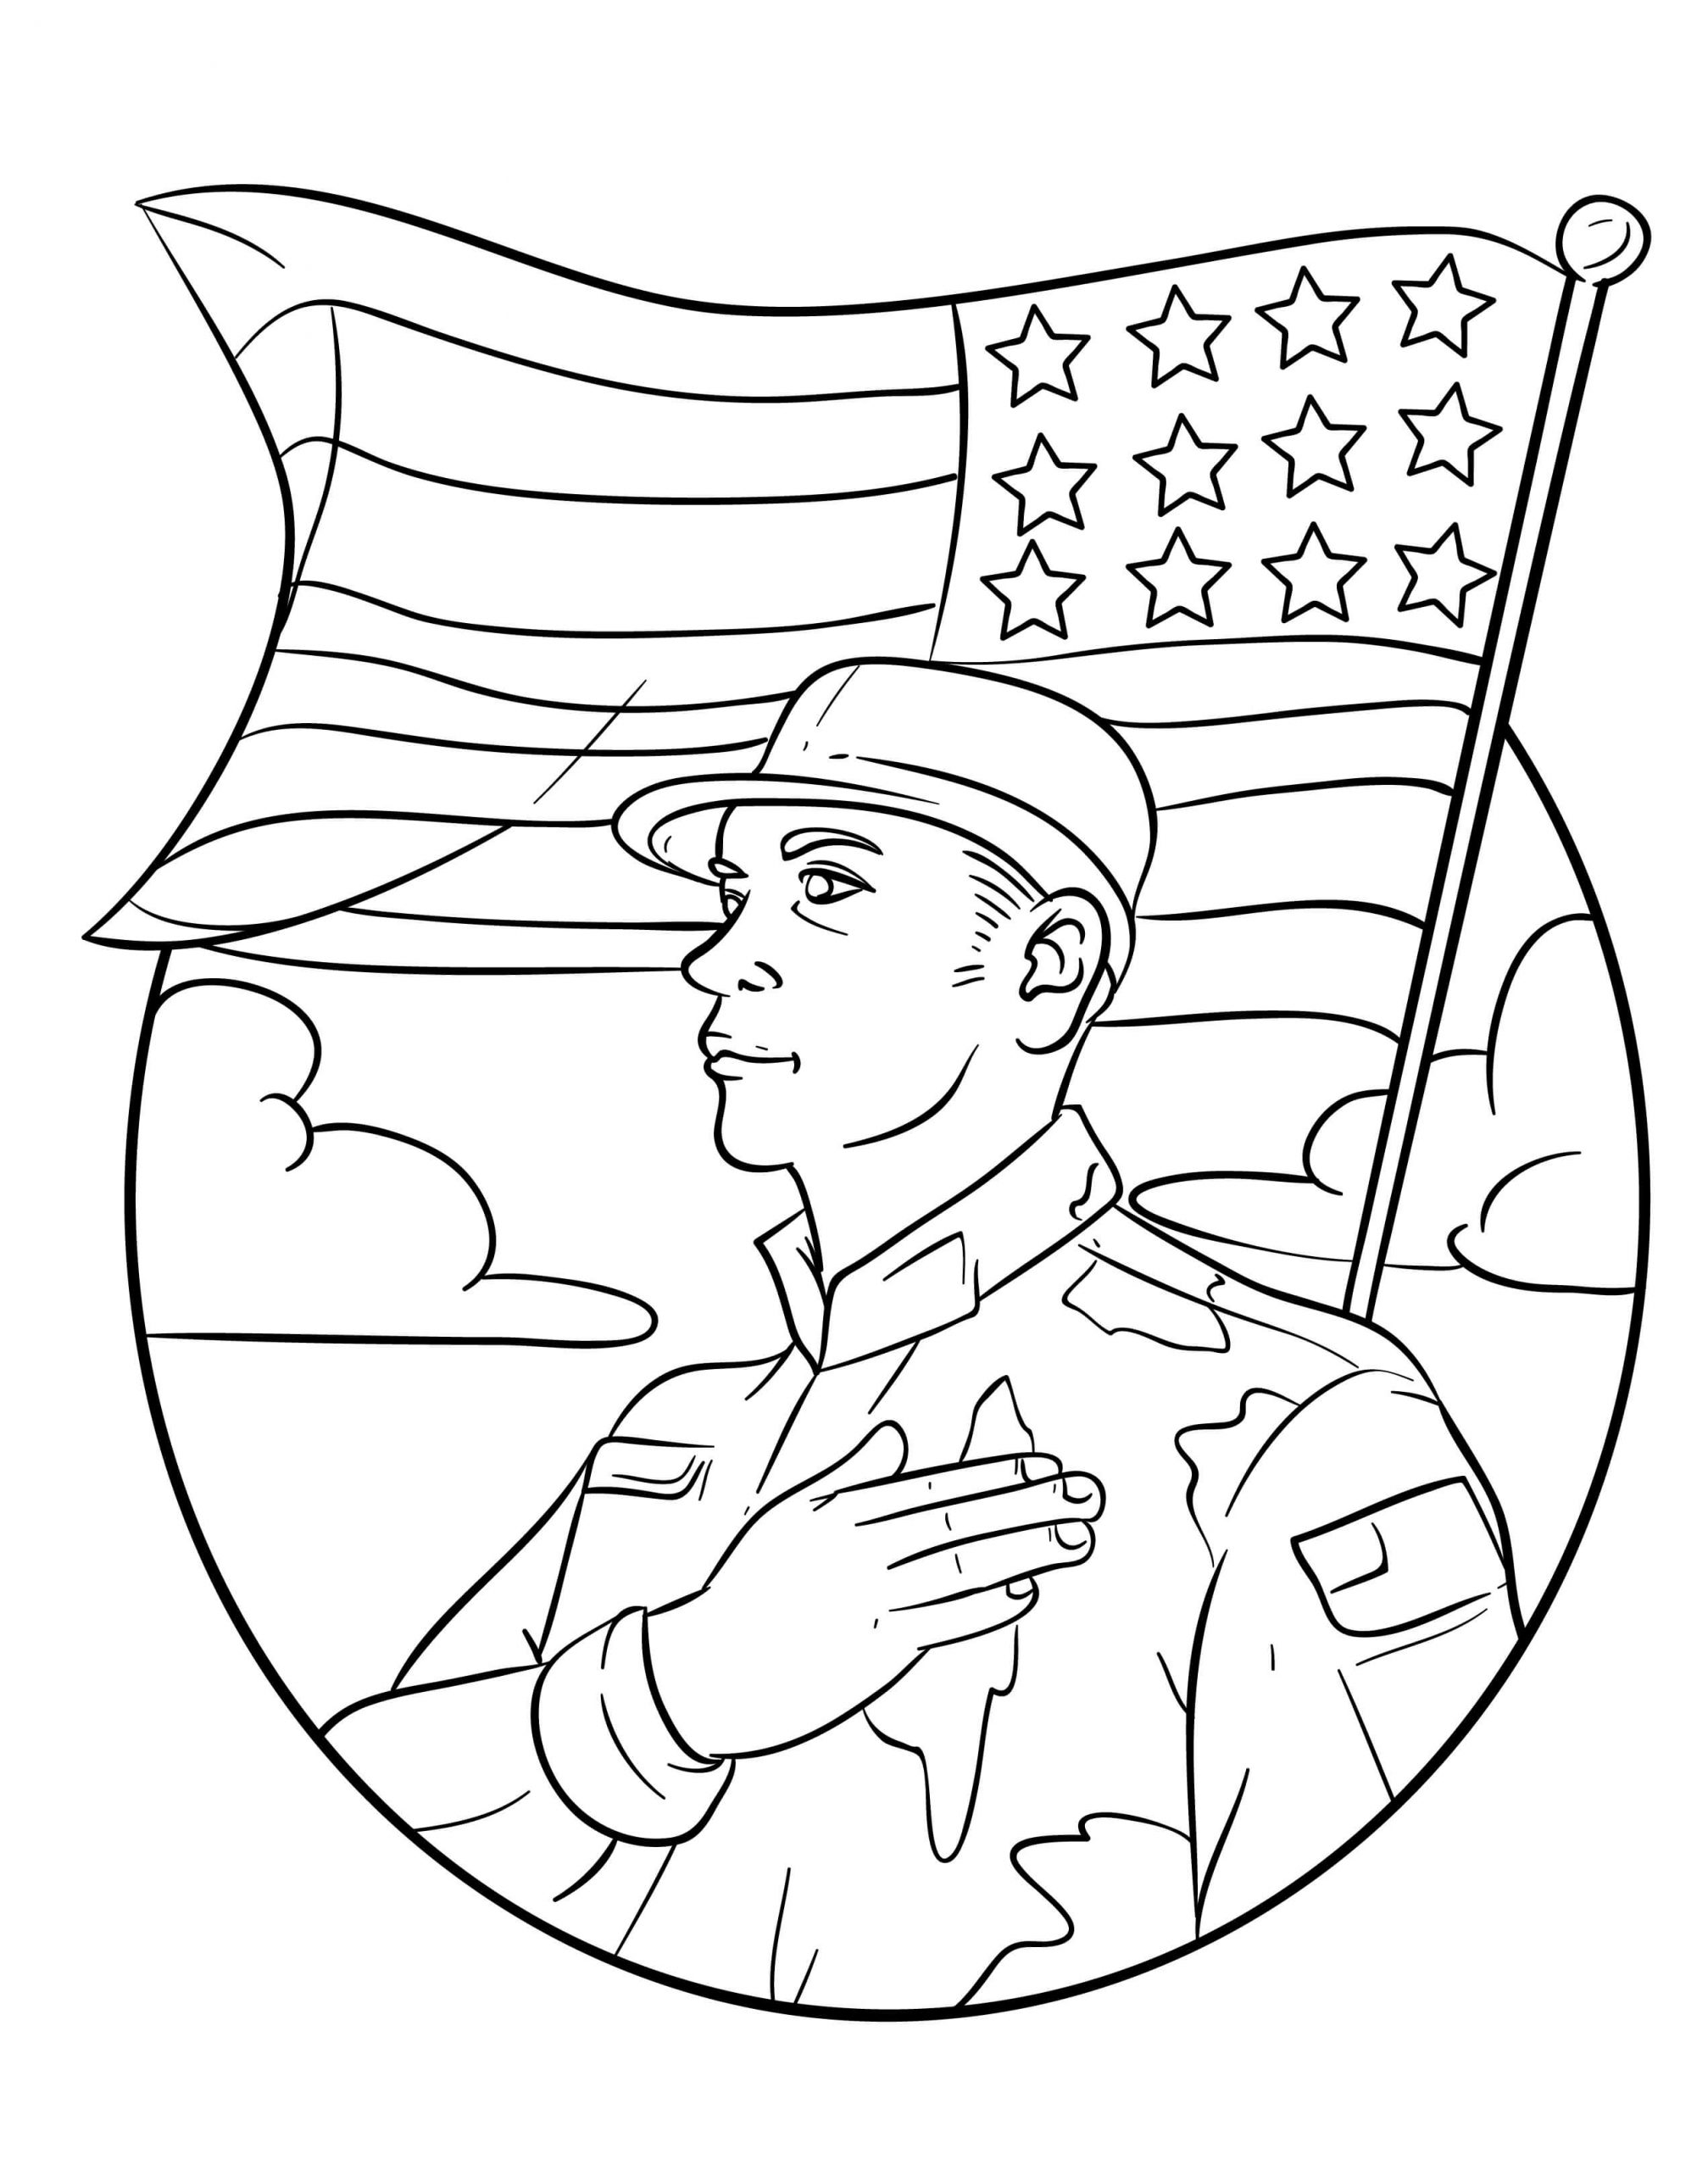 Desenhos de Soldado do Exército dos Estados Unidos para colorir